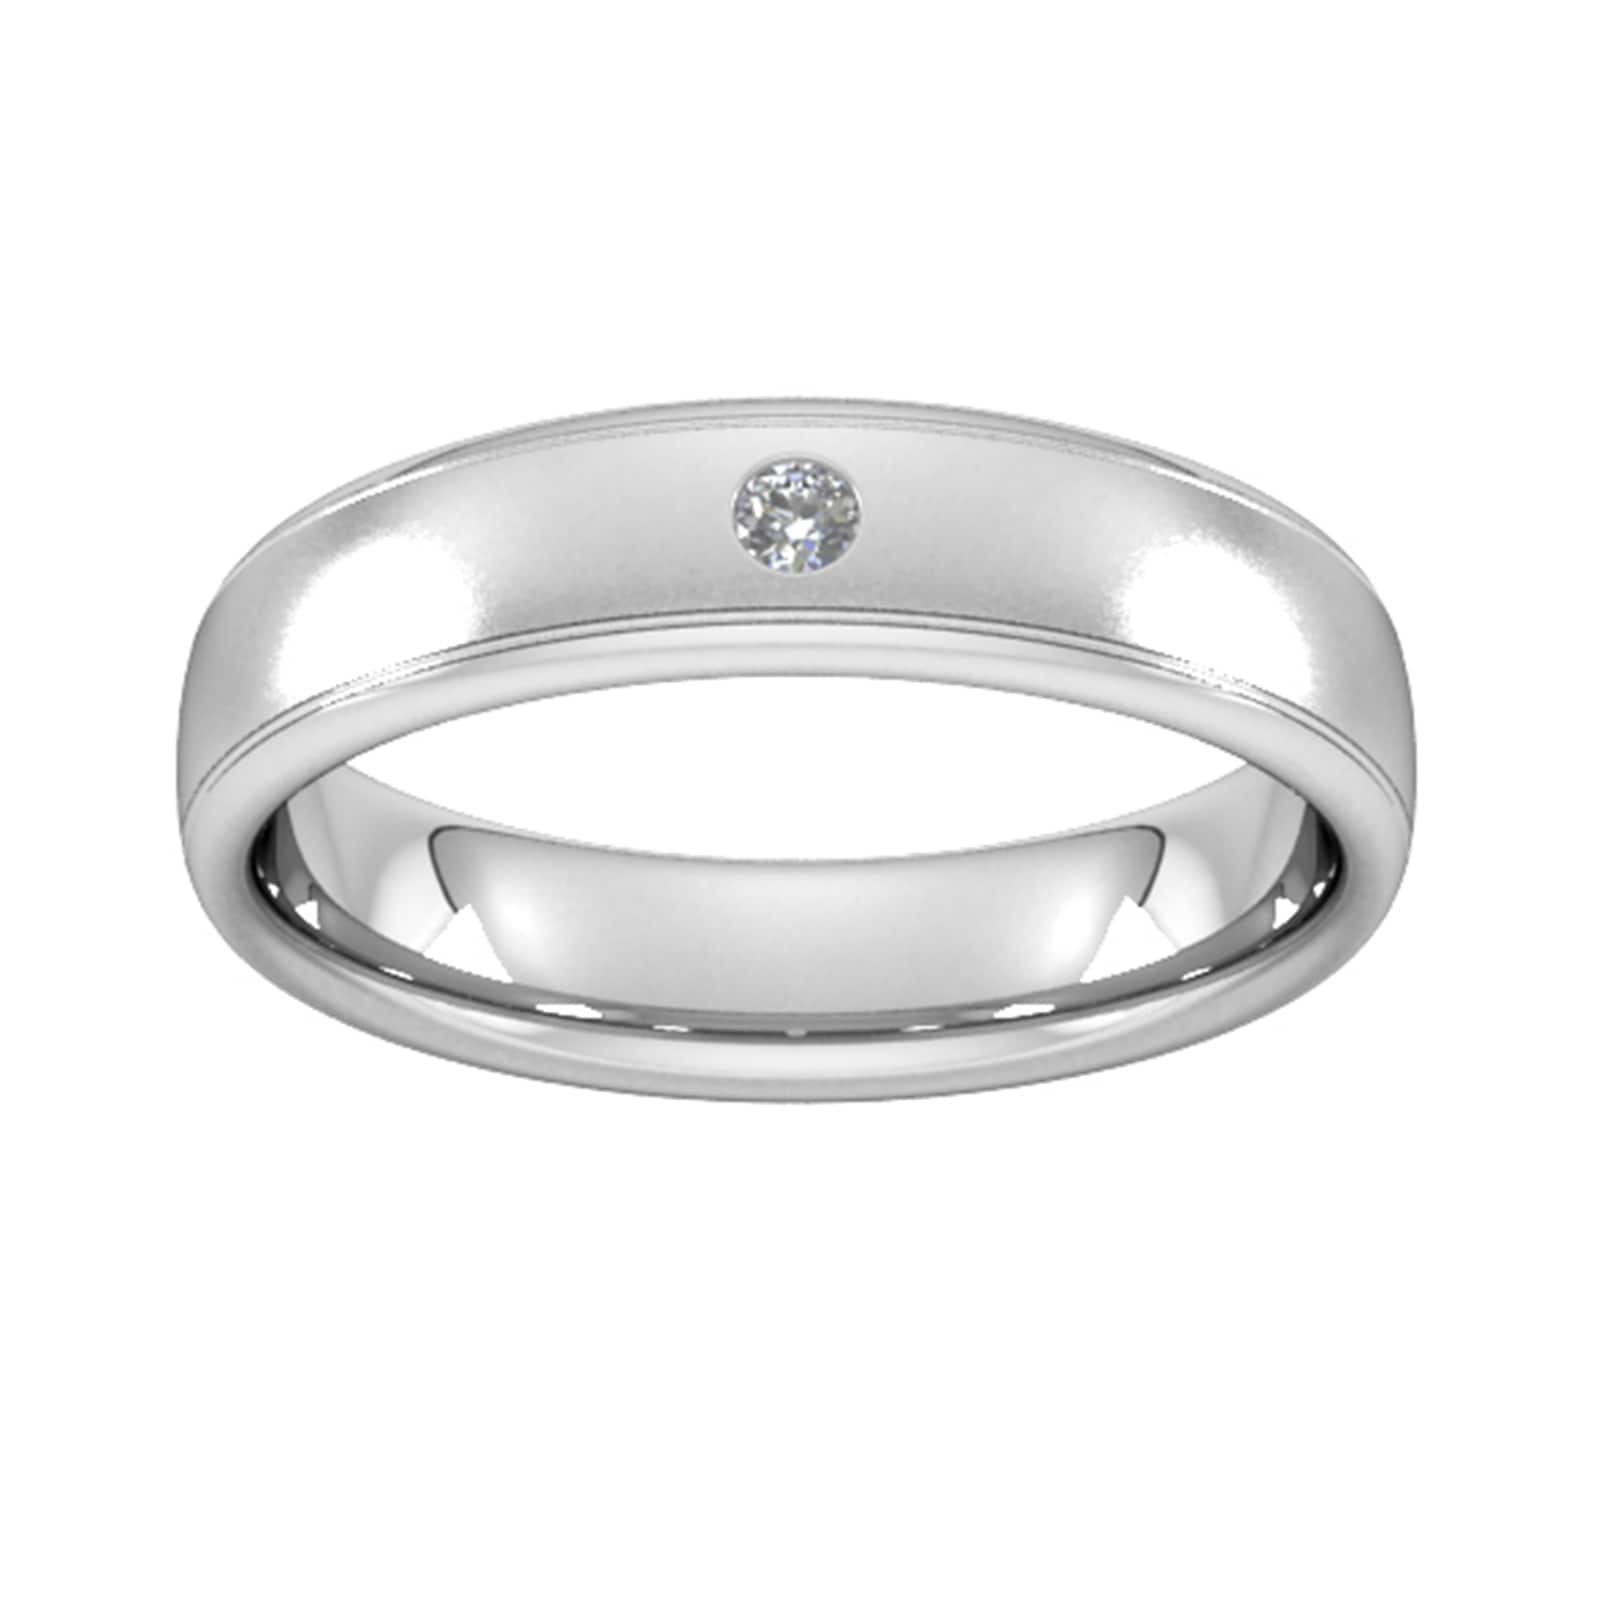 5mm Brilliant Cut Diamond Set Wedding Ring In Platinum - Ring Size M